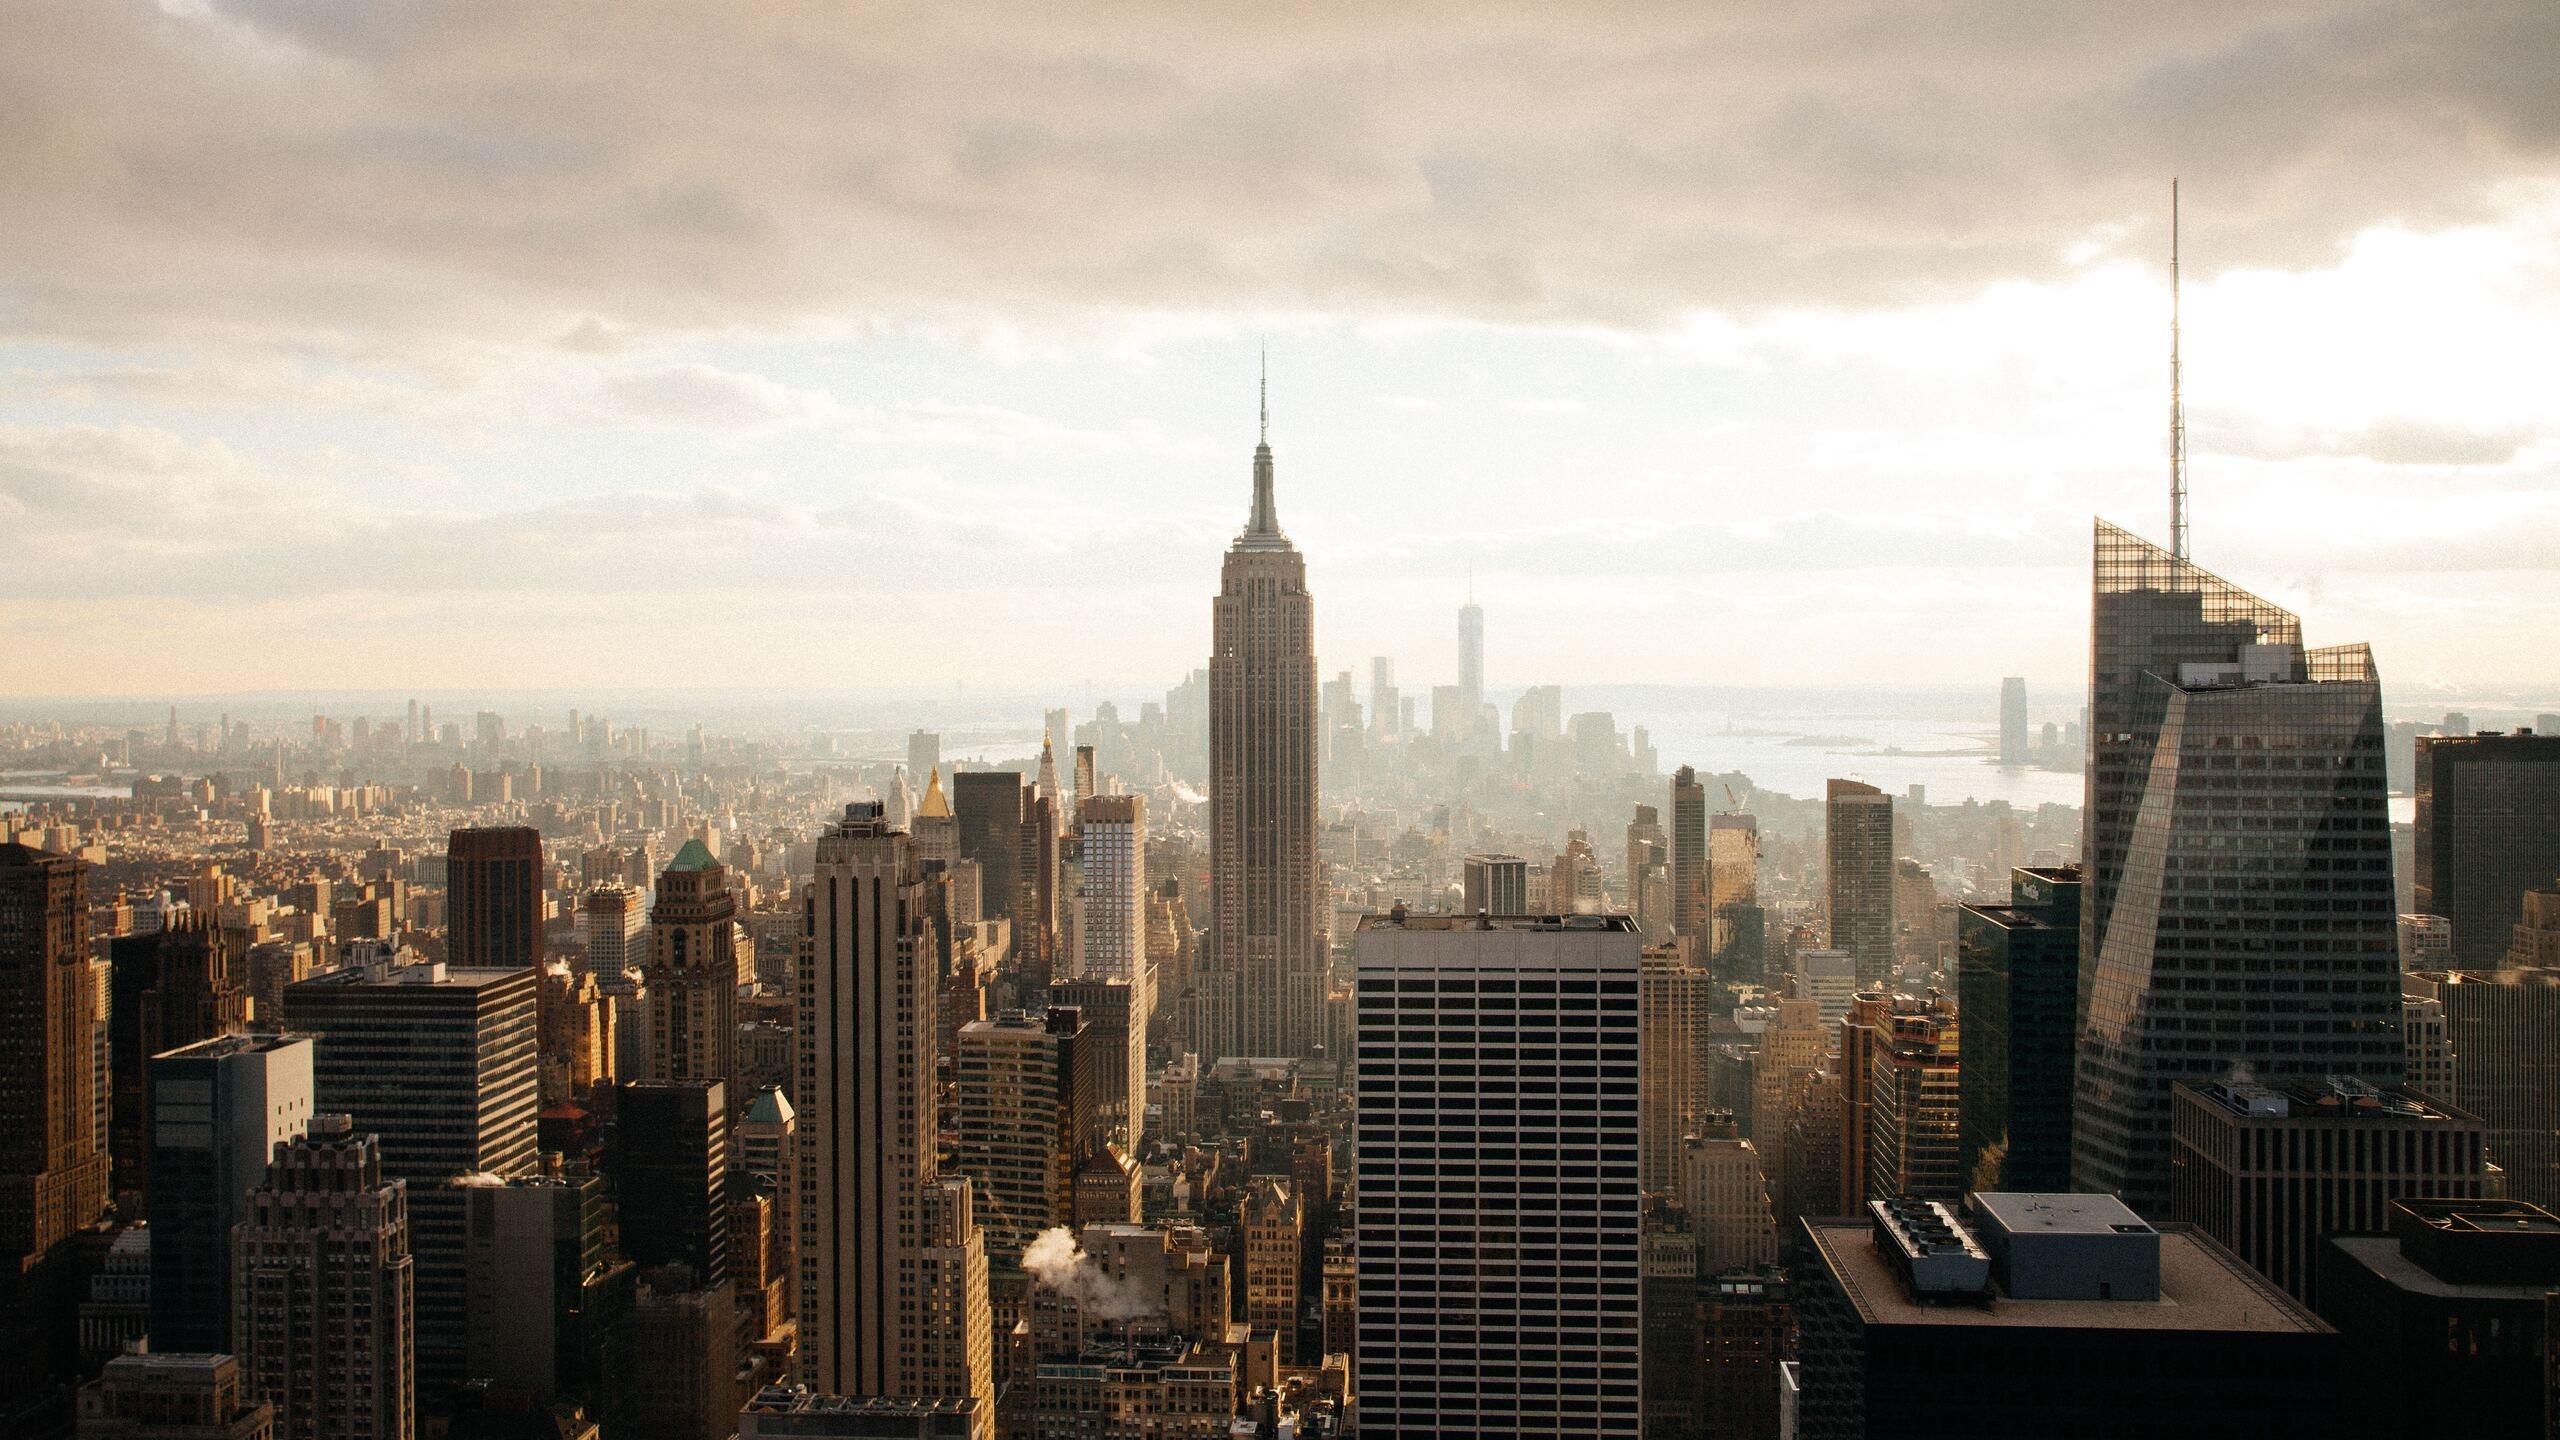 Empire State Building, Skyscraper marvel, 1440p resolution, HD images, 2560x1440 HD Desktop